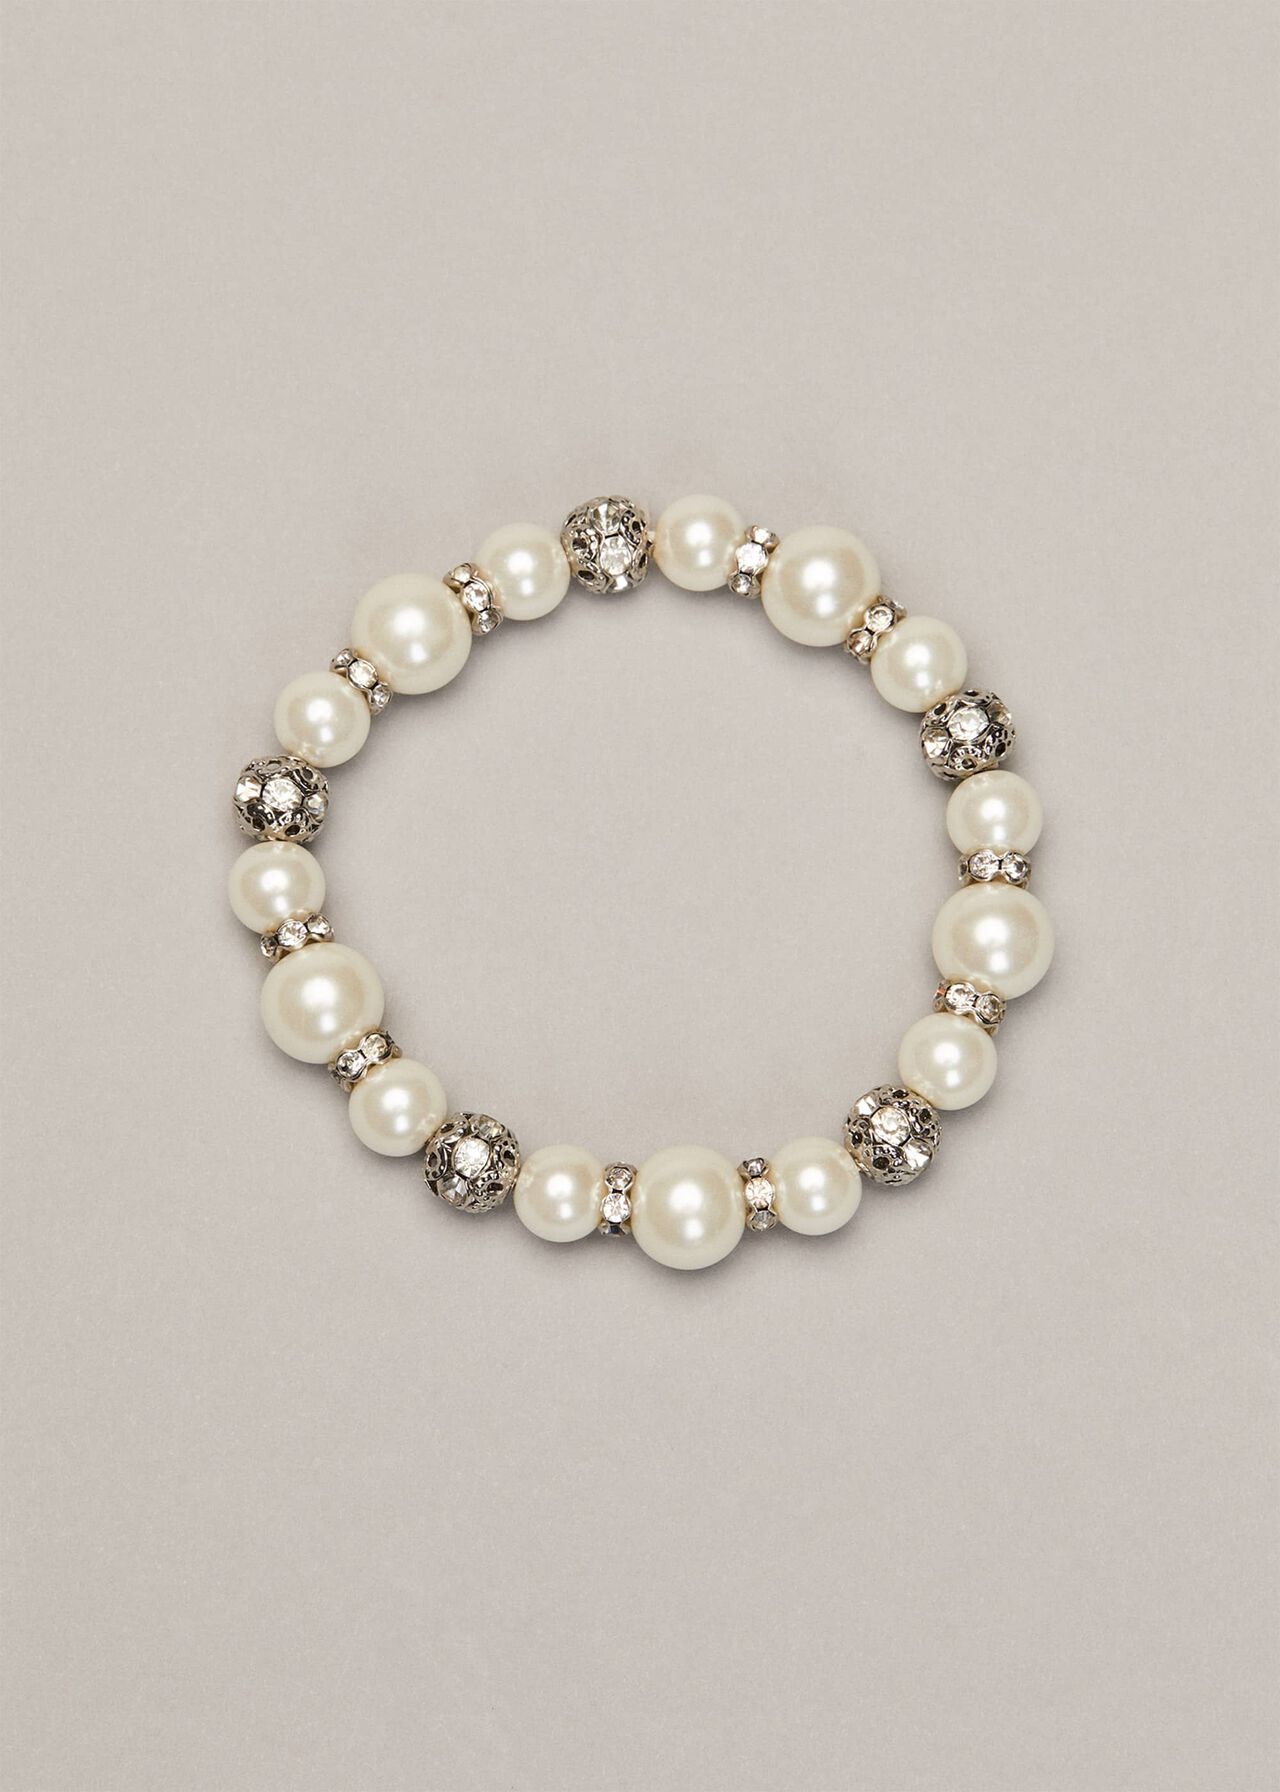 Parma Pearl And Crystal Bracelet